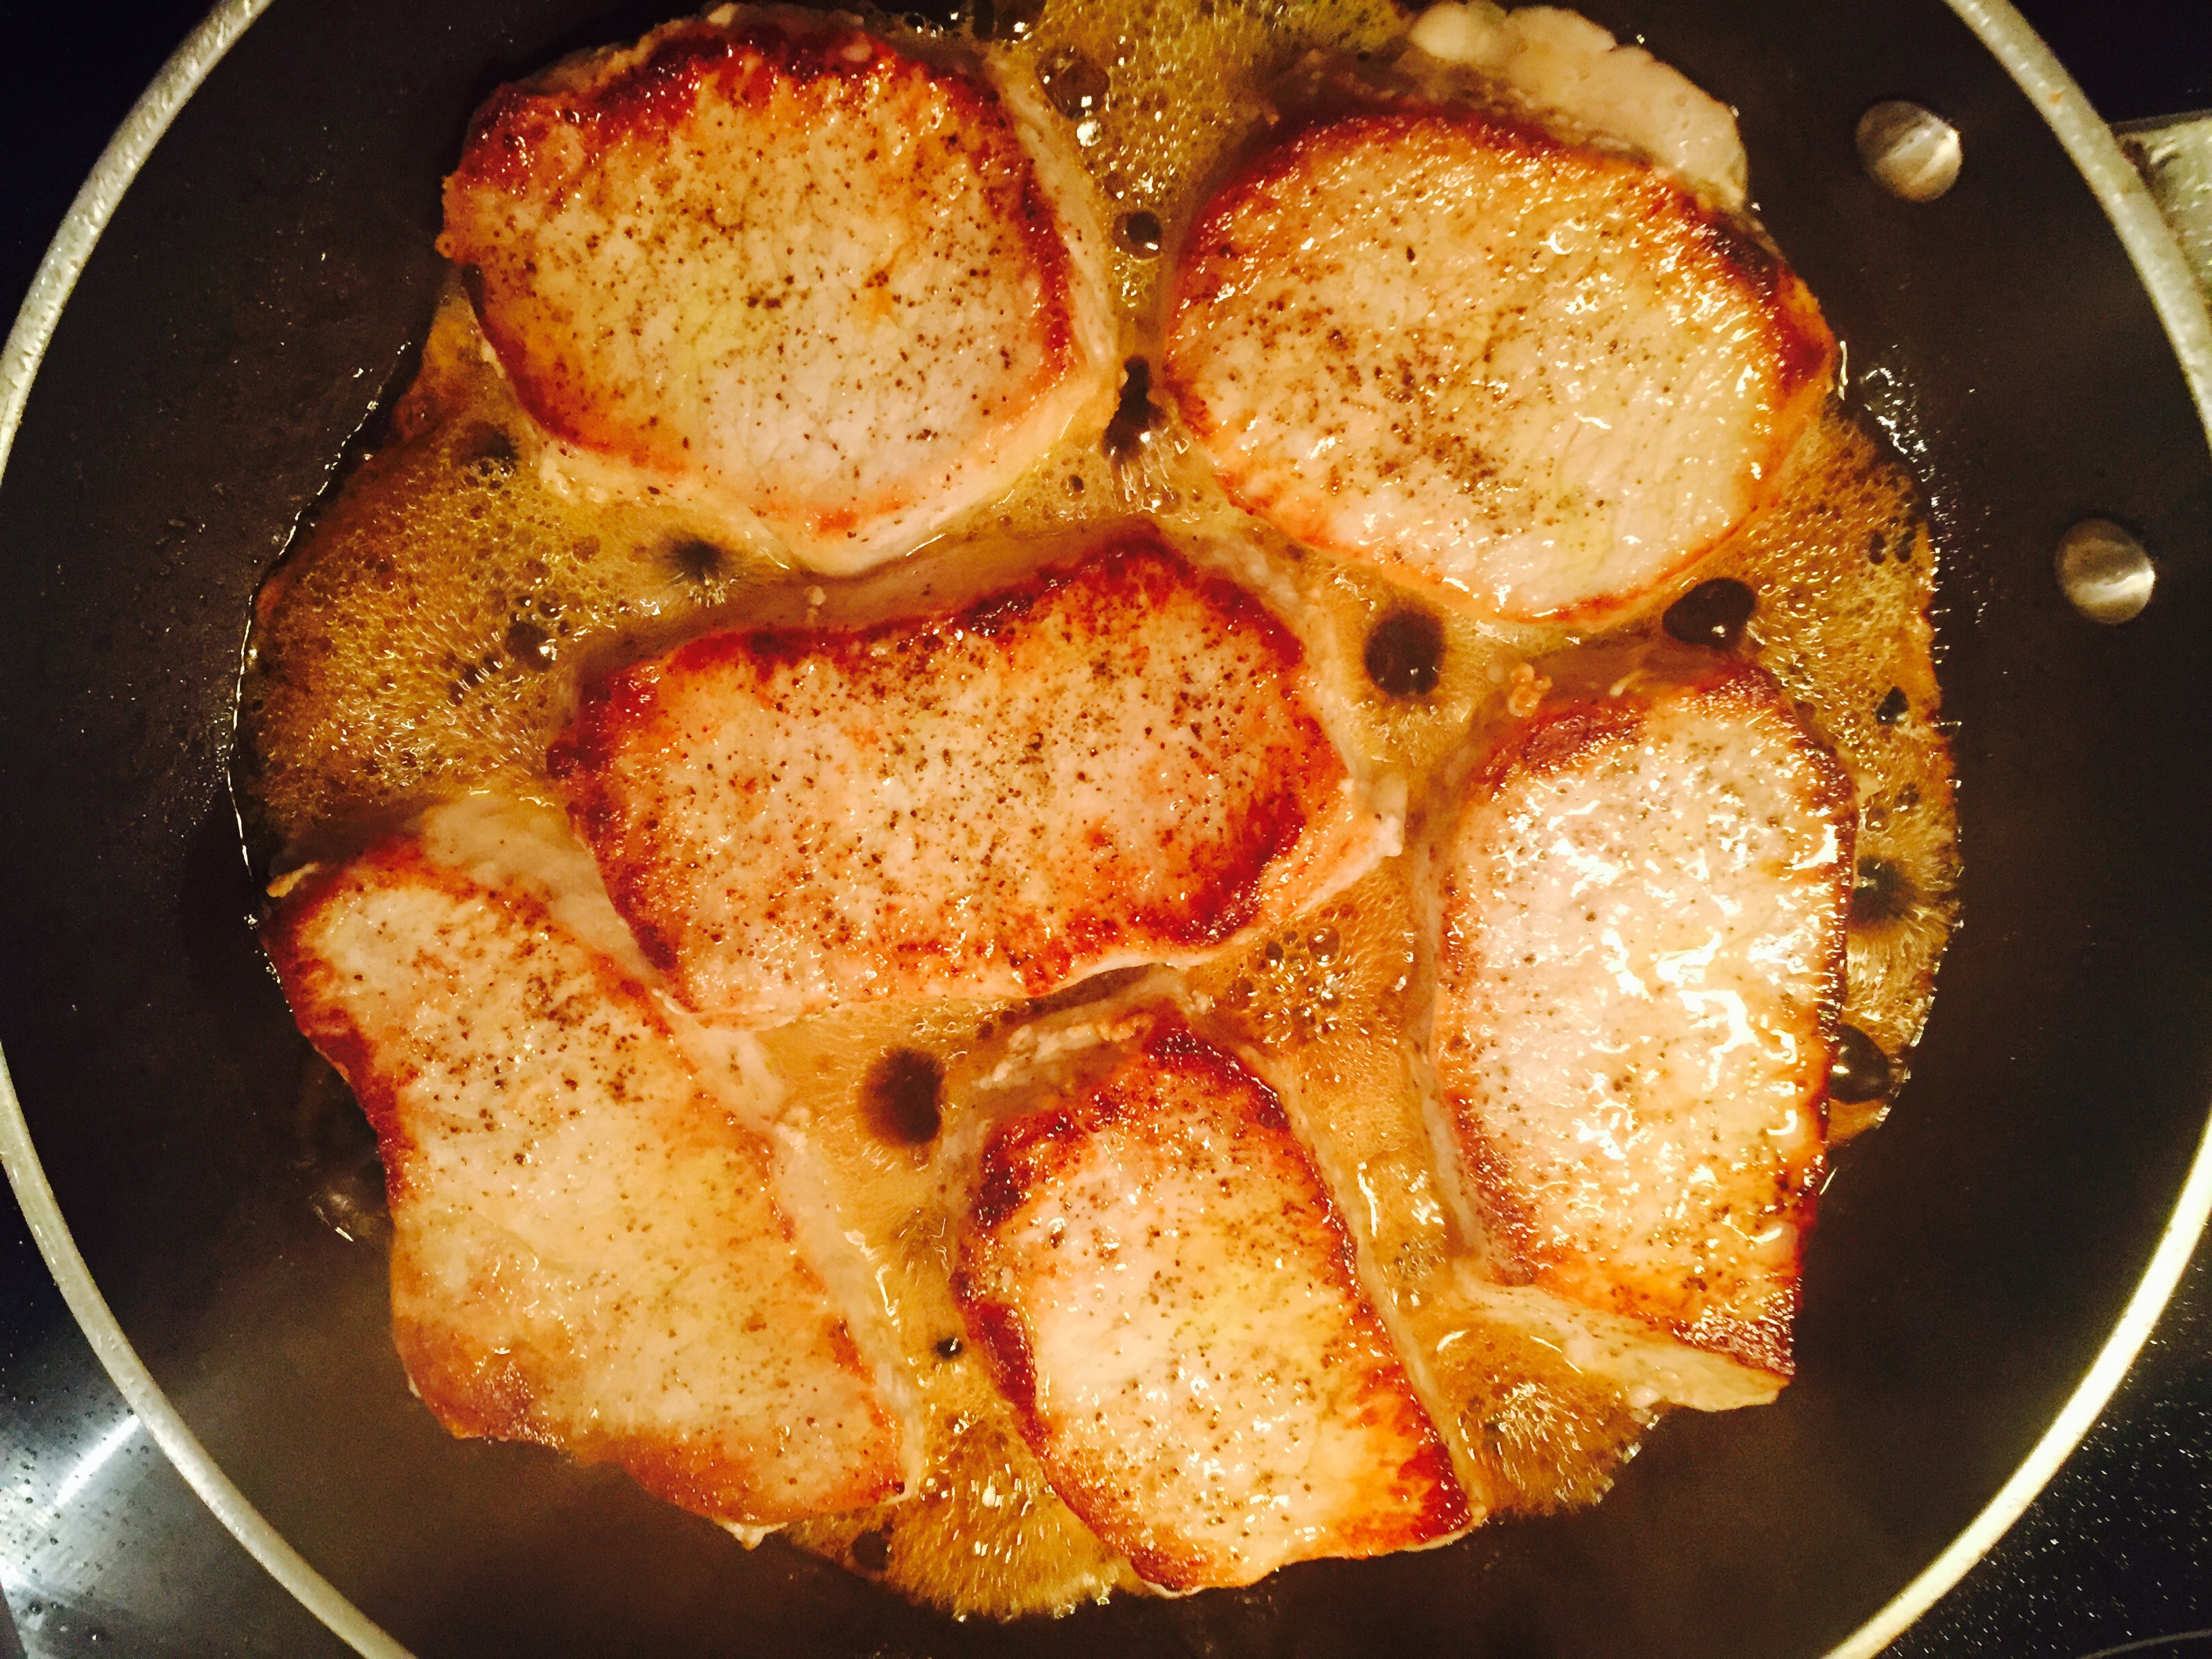 Seasoned organic pork chops being seared in a non-stick pan